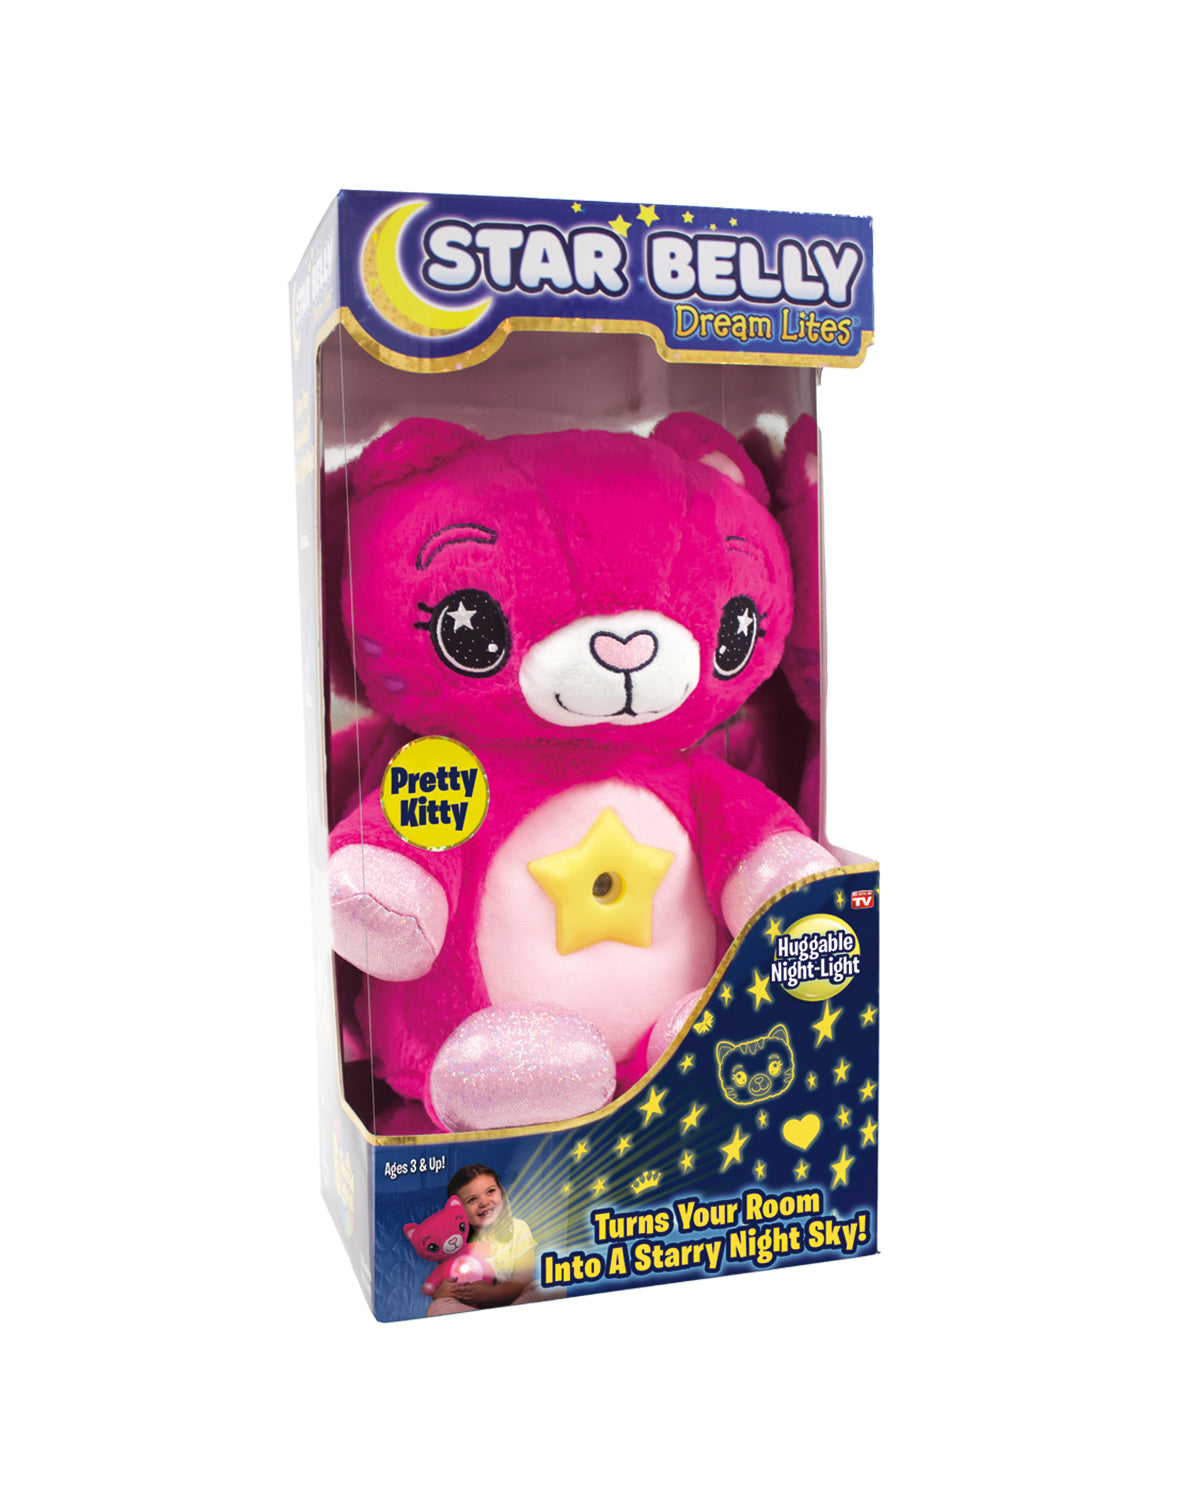 Star Belly Dream Lites Pretty Kitty